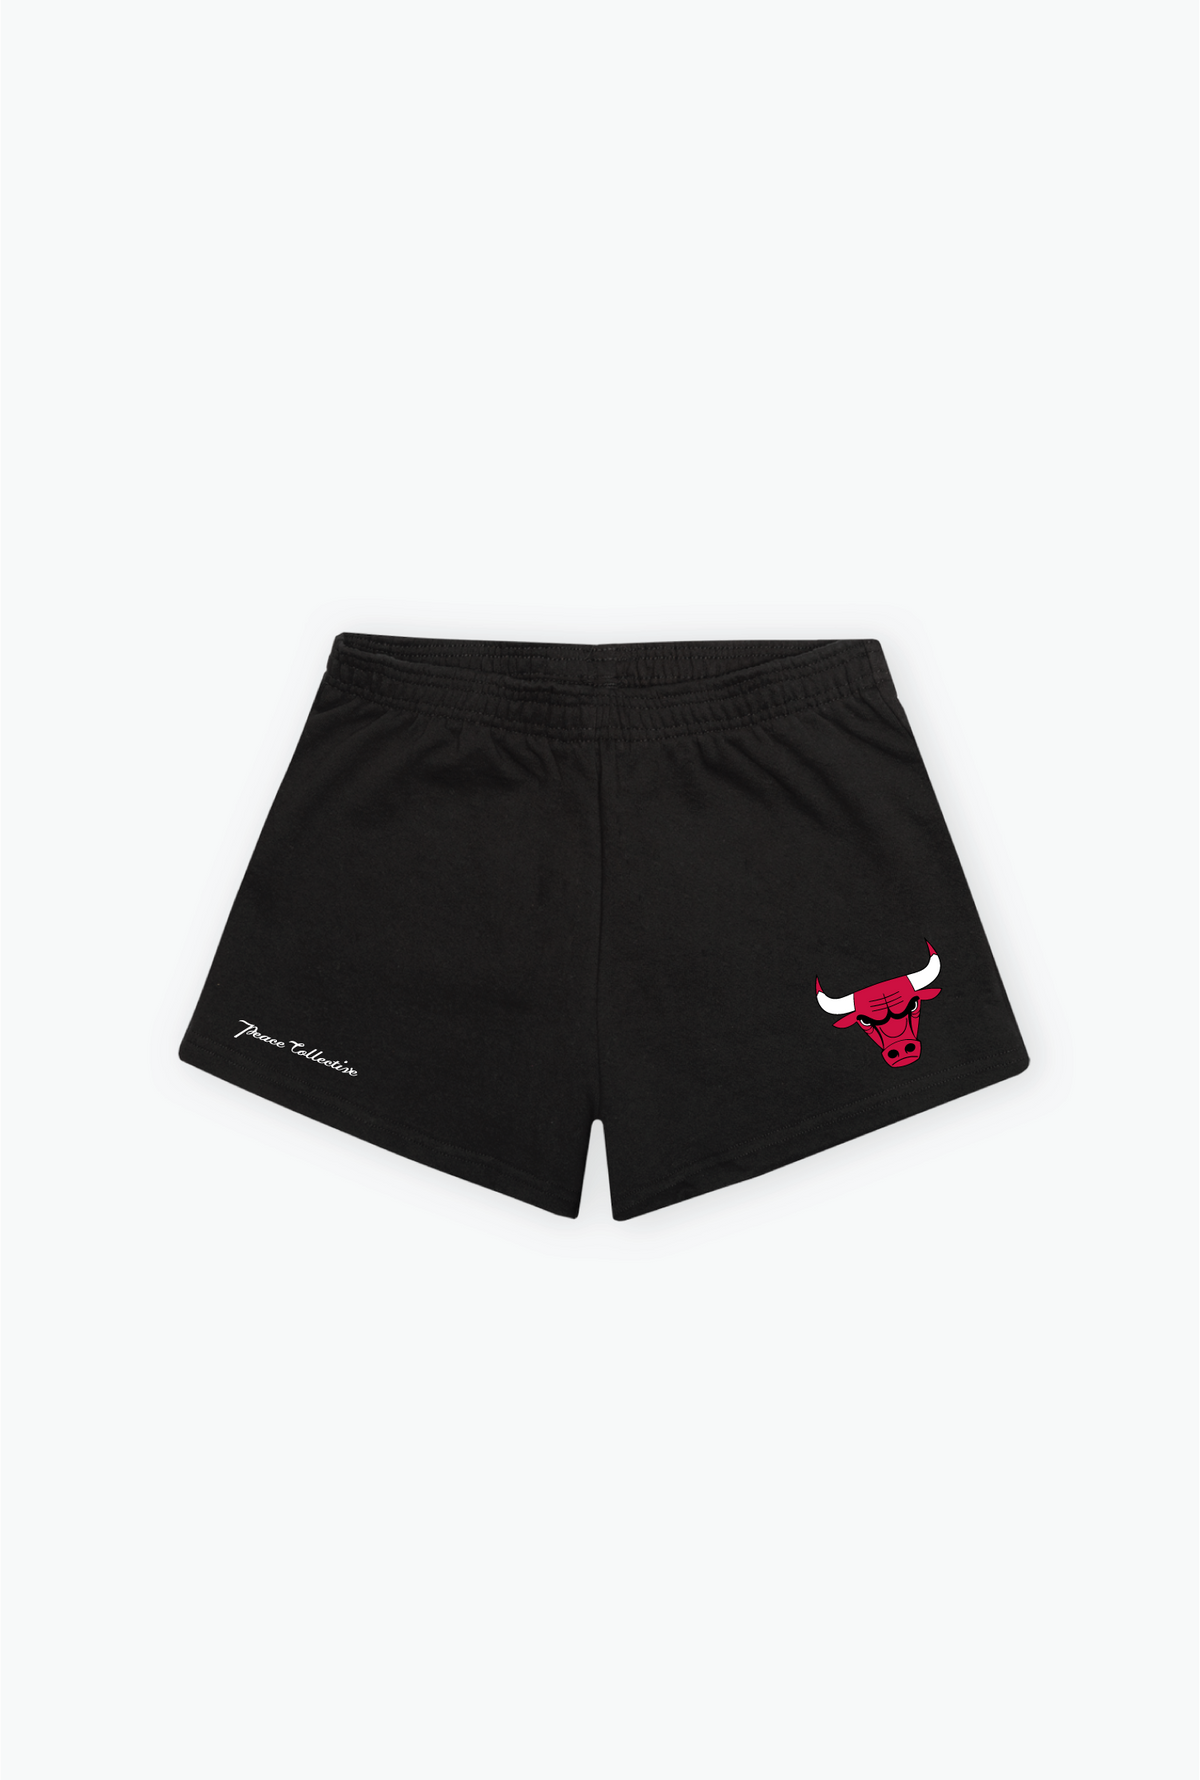 Chicago Bulls Women's Fleece Shorts - Black